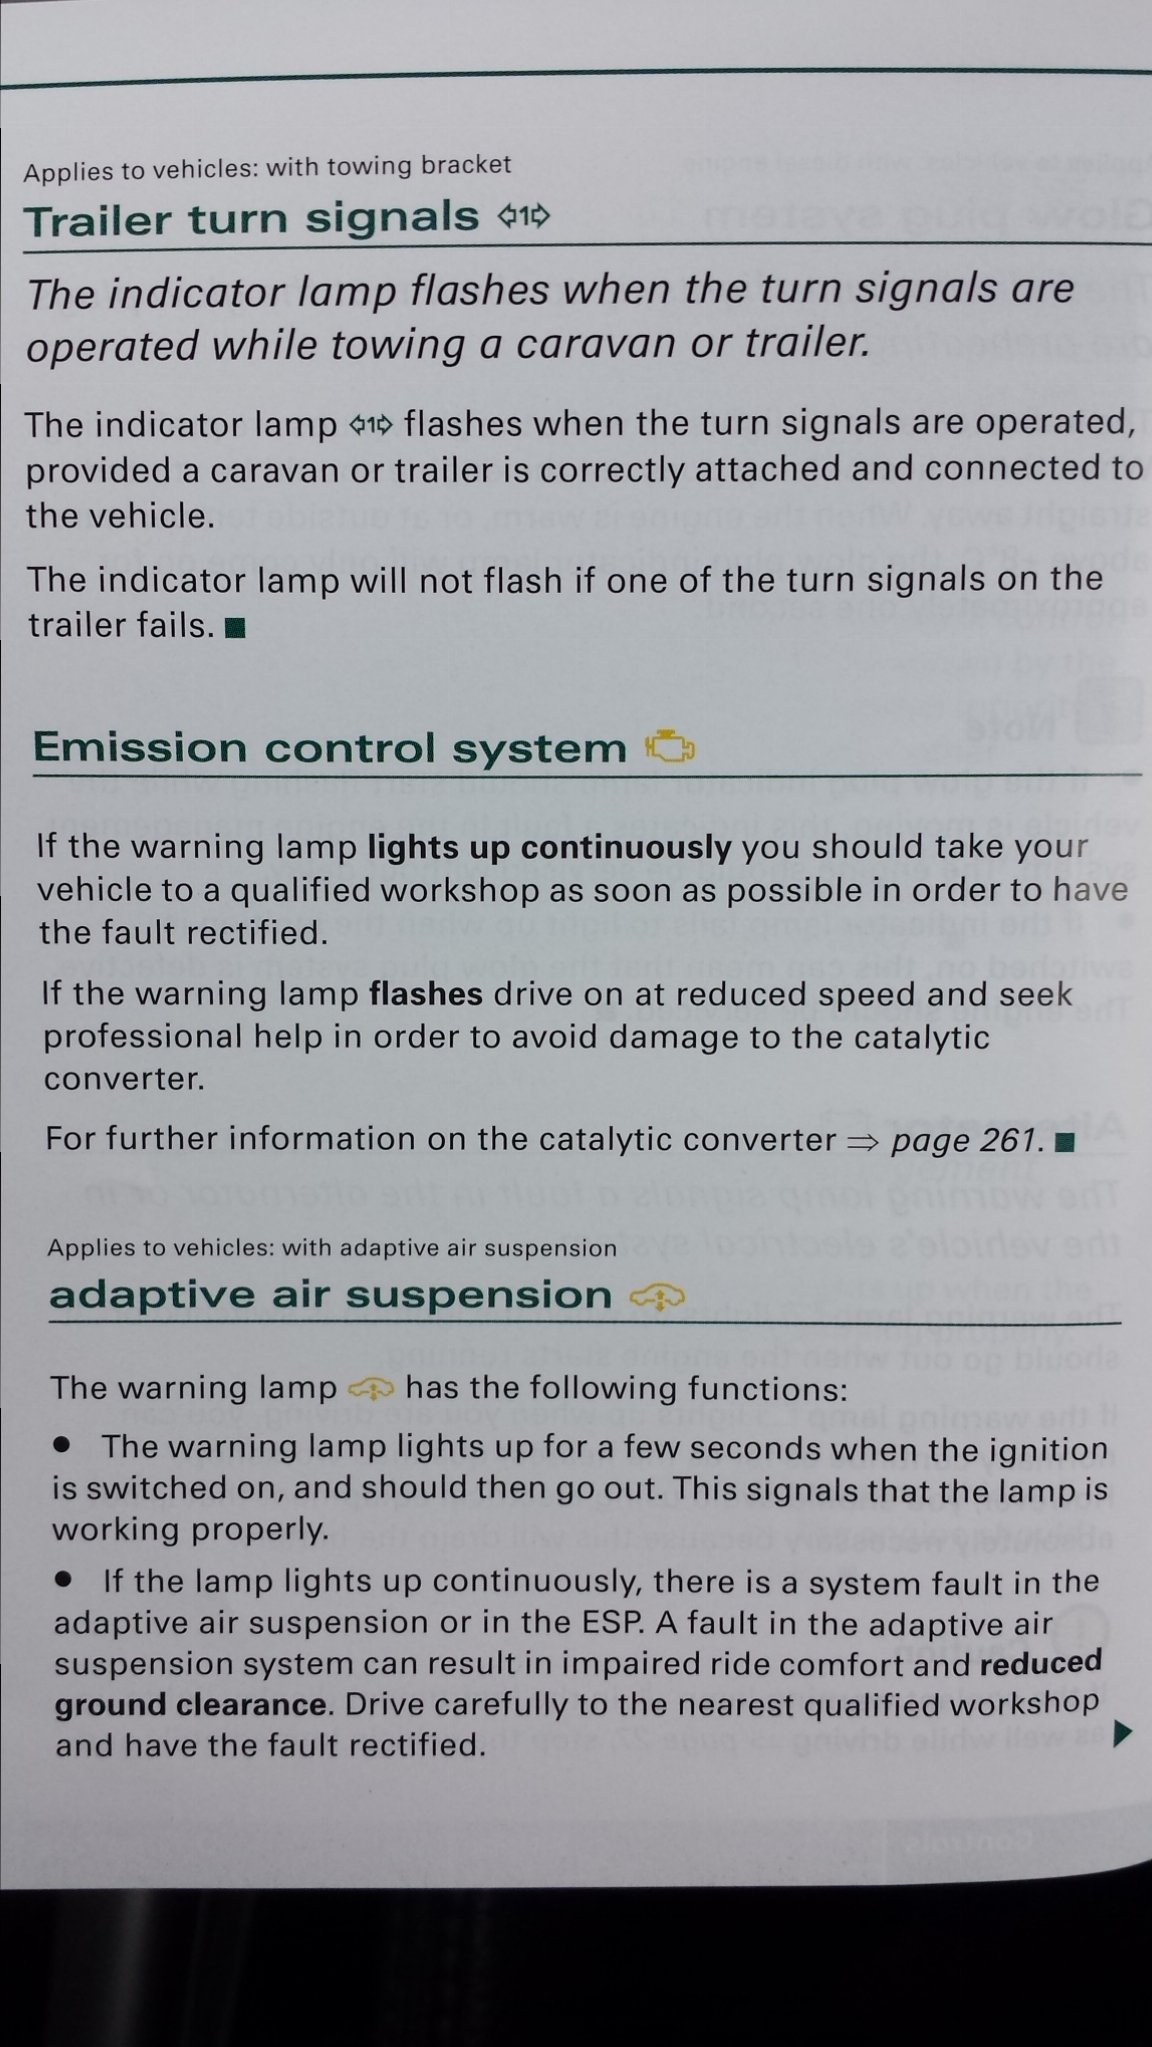 Emission control warning light - causes? | Audi-Sport.net